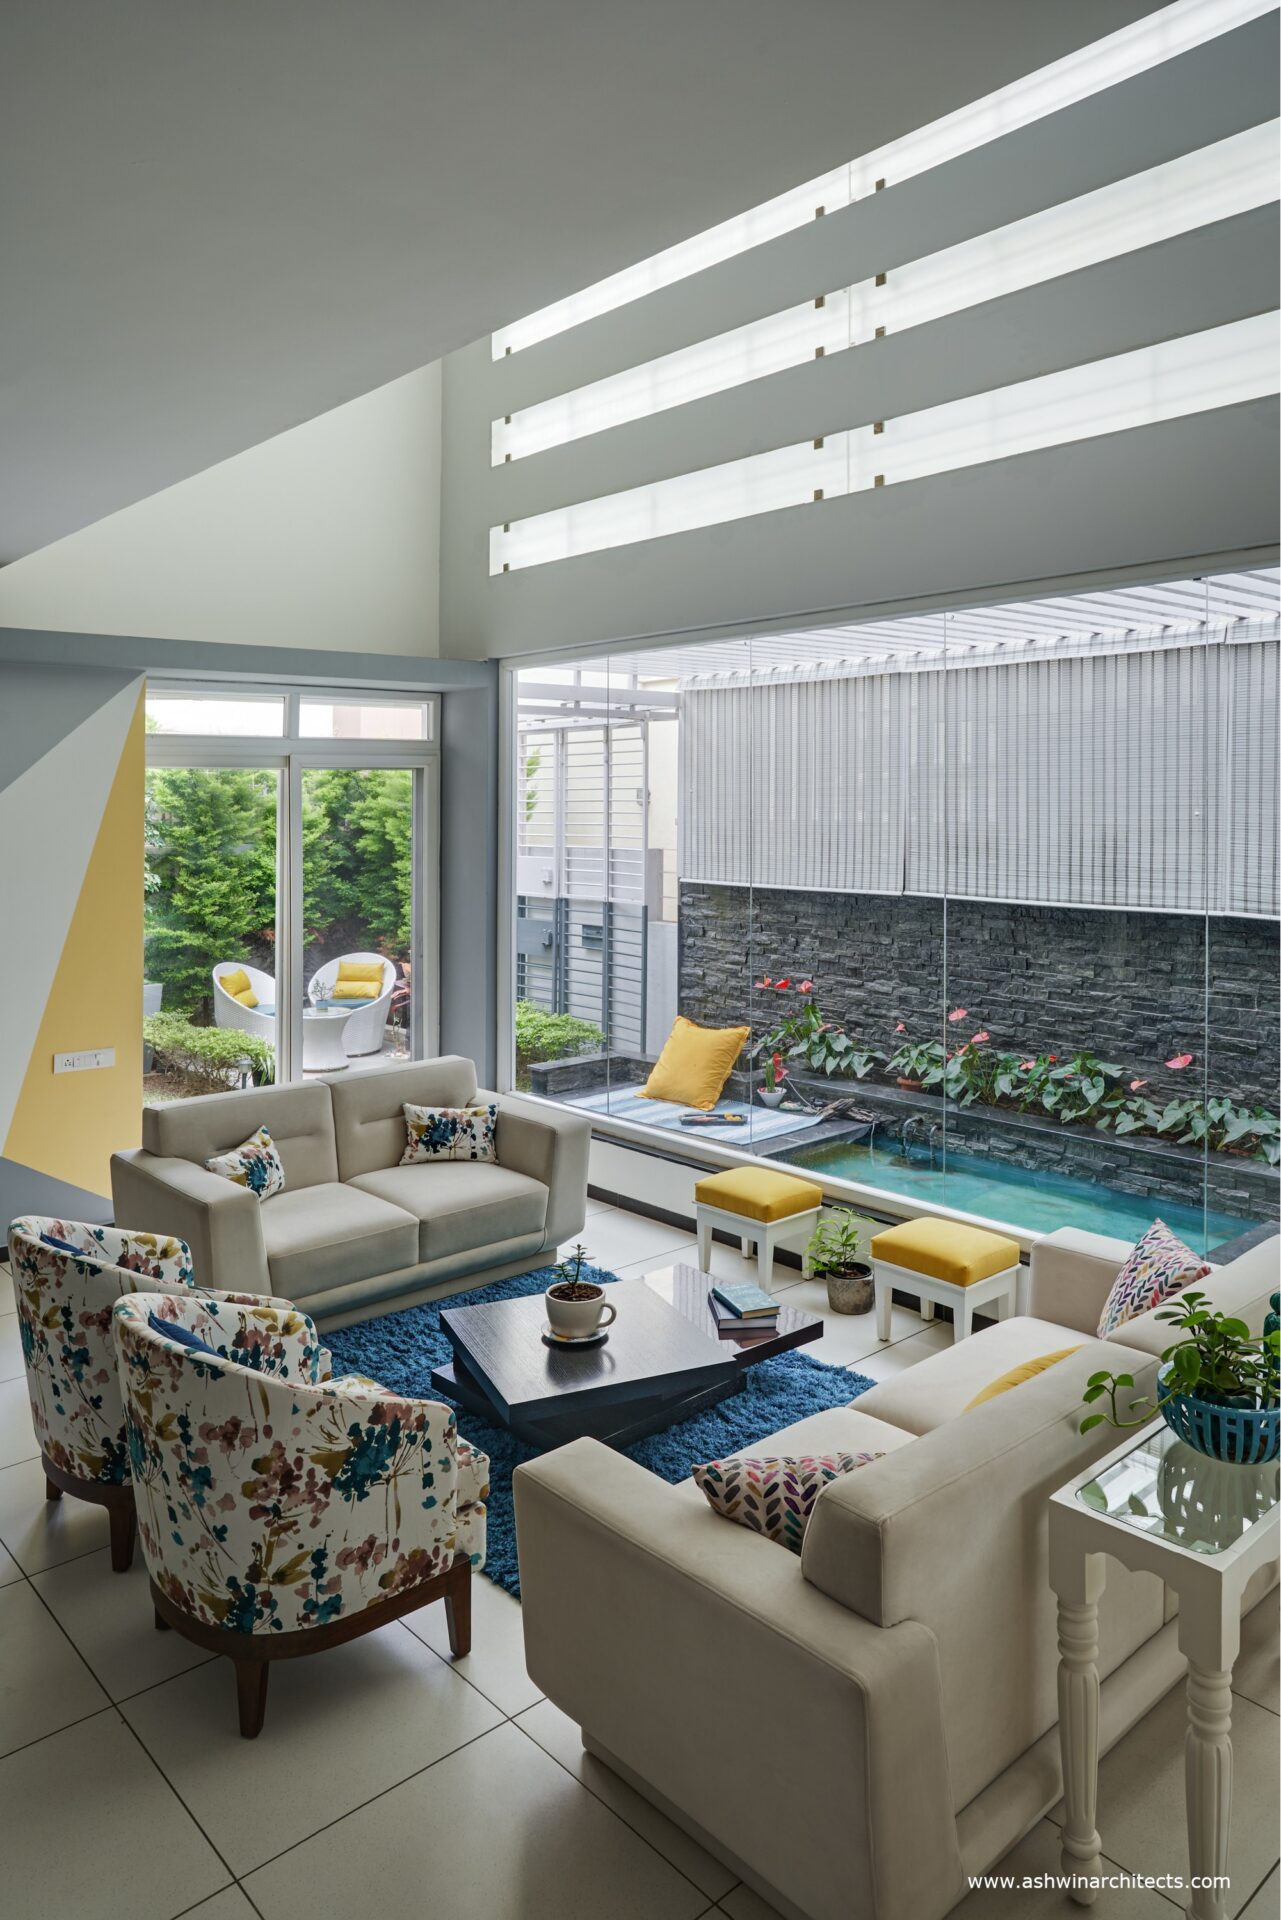 40x60-plot-Home-Interiors-Kailash-Residence-40-x-60-Plot-3BHK-Duplex-Bungalow-3500-sft.-Family-Home-Design